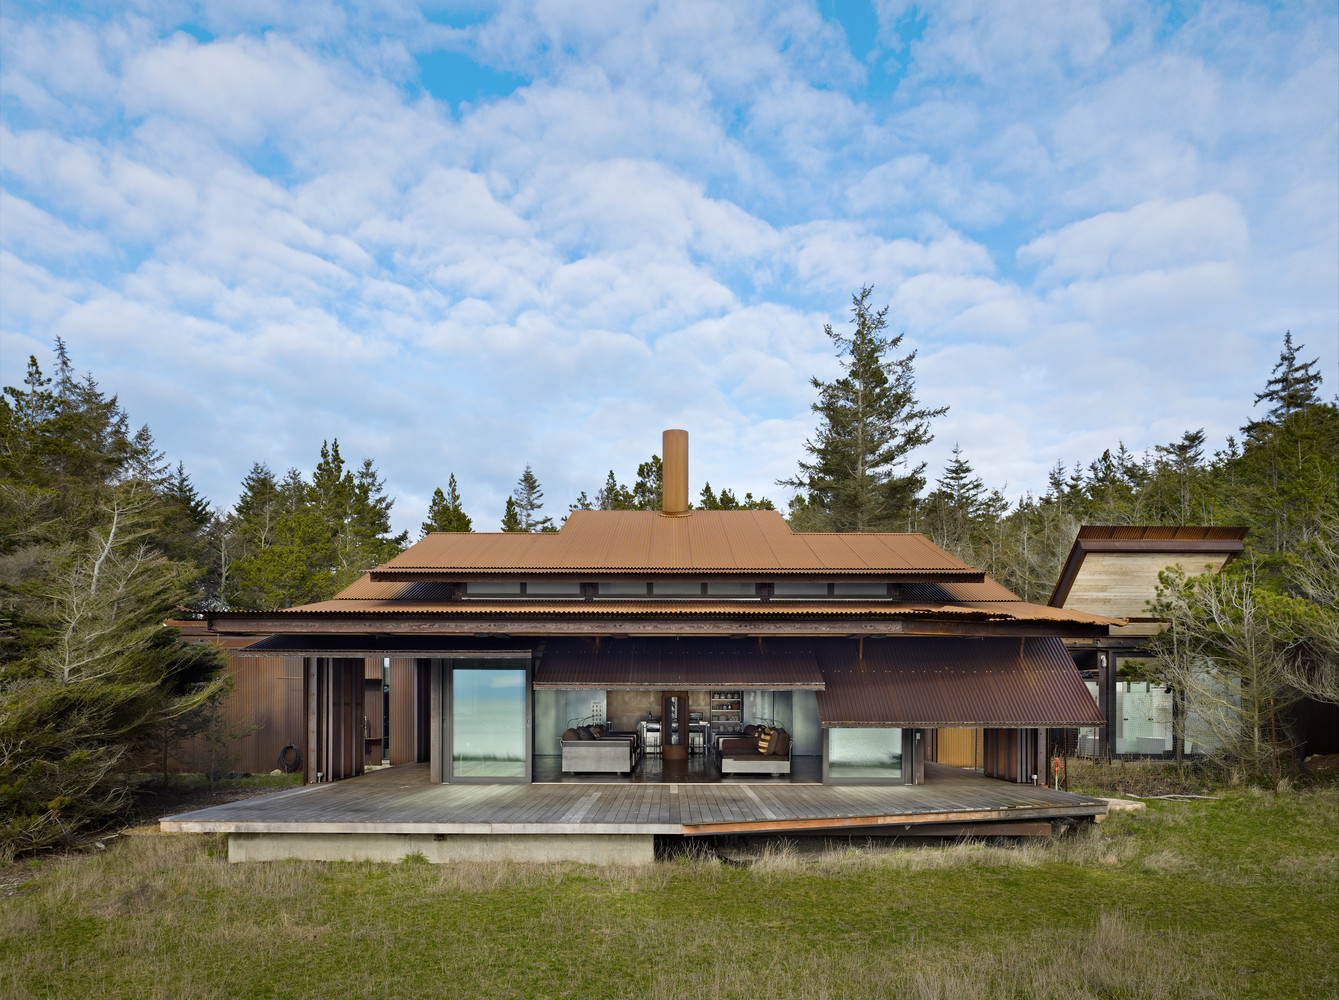 The Shadowboxx House by Olson Kundig Architects